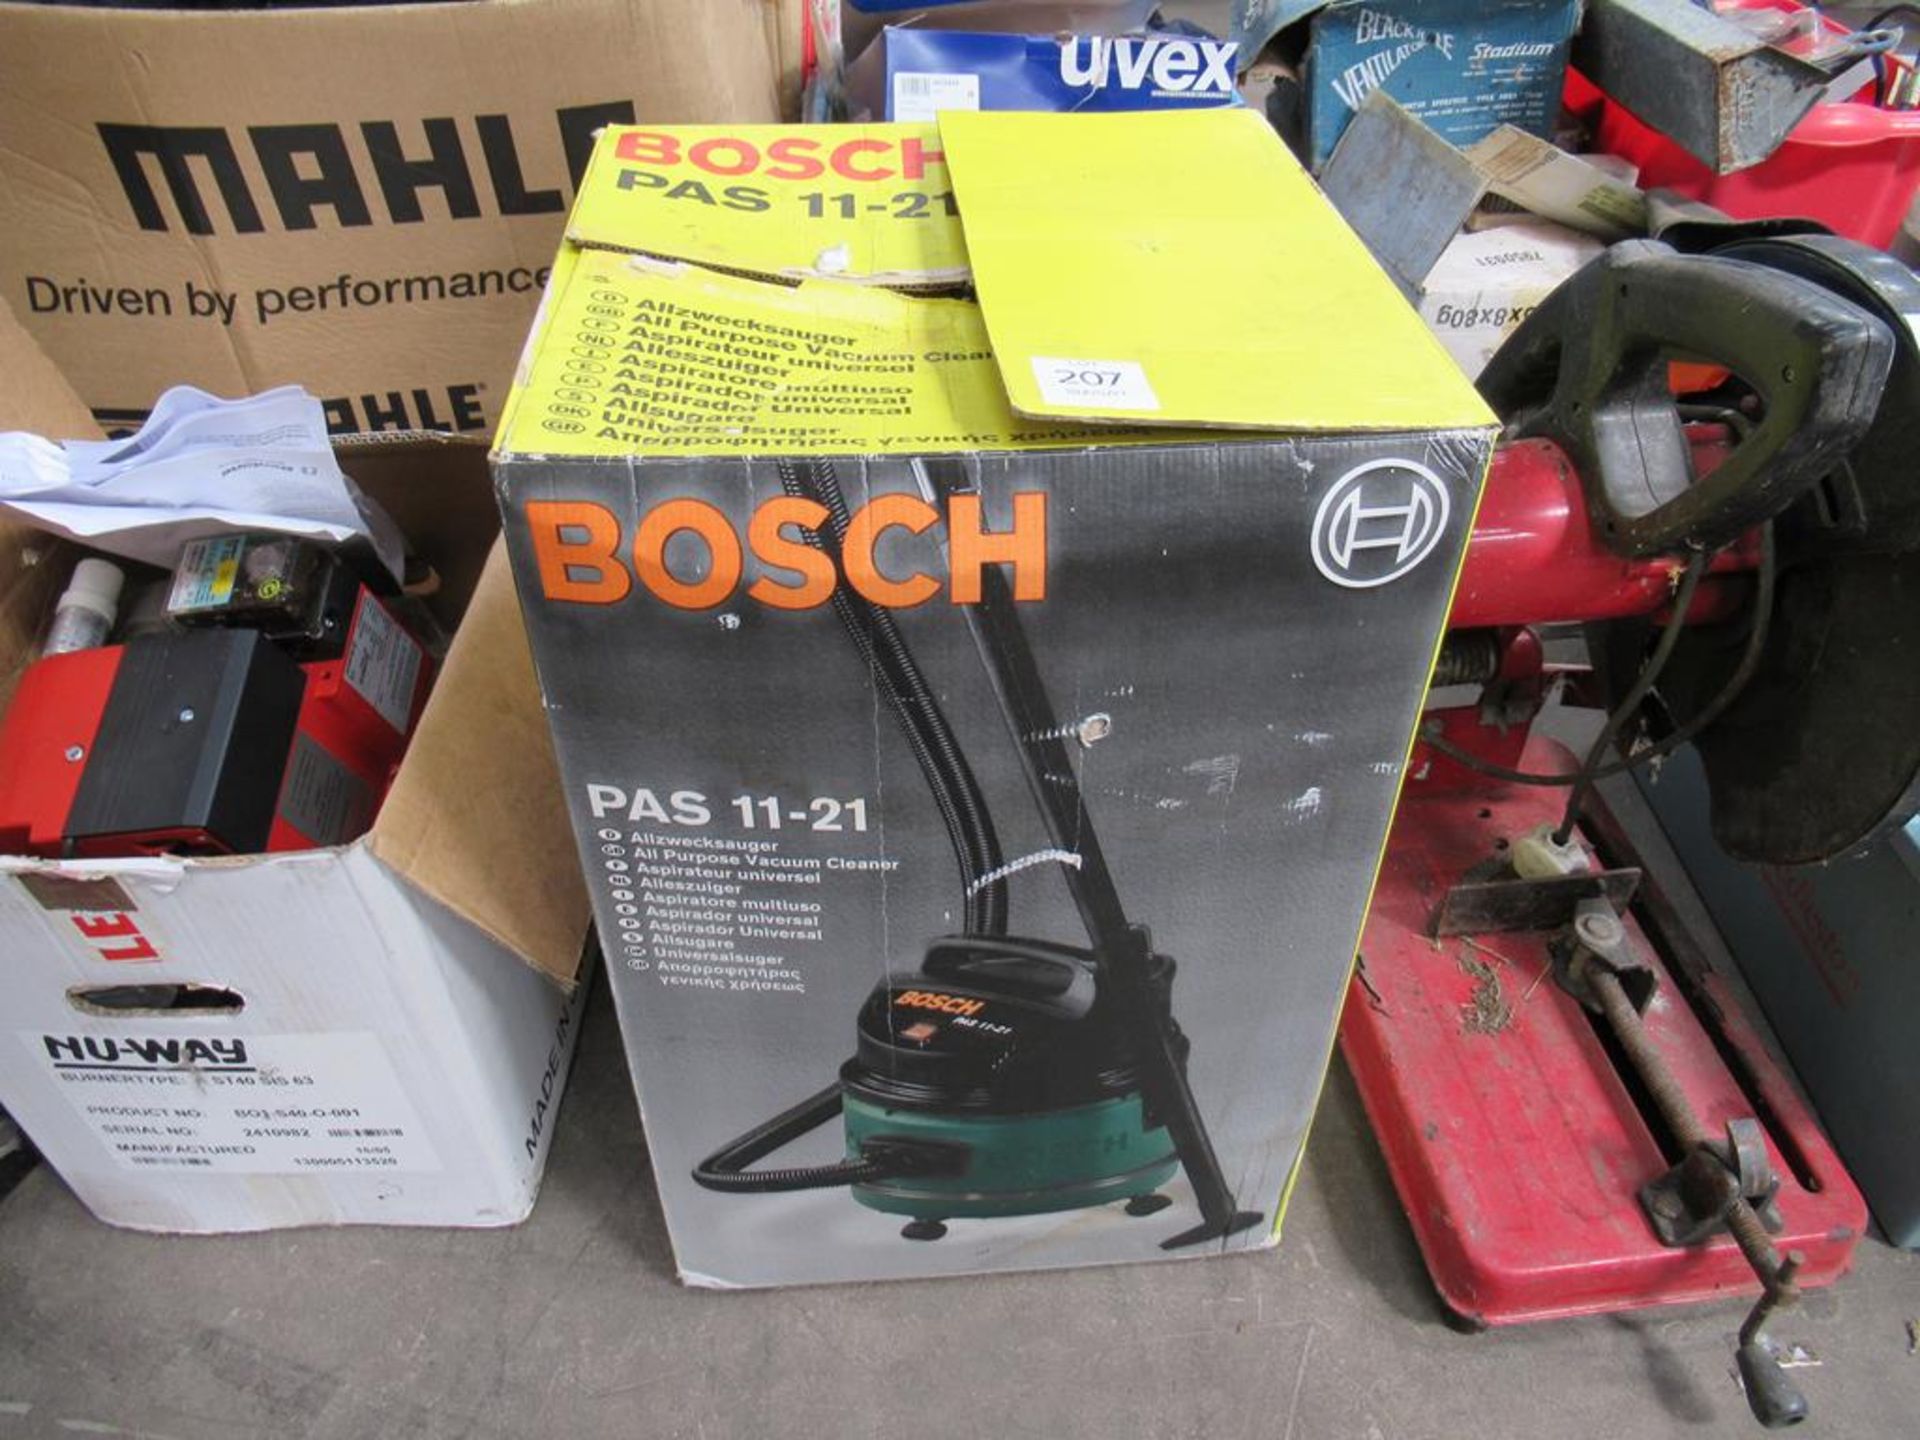 Bosch PAS 11-21 all purpose vacuum cleaner (boxed)